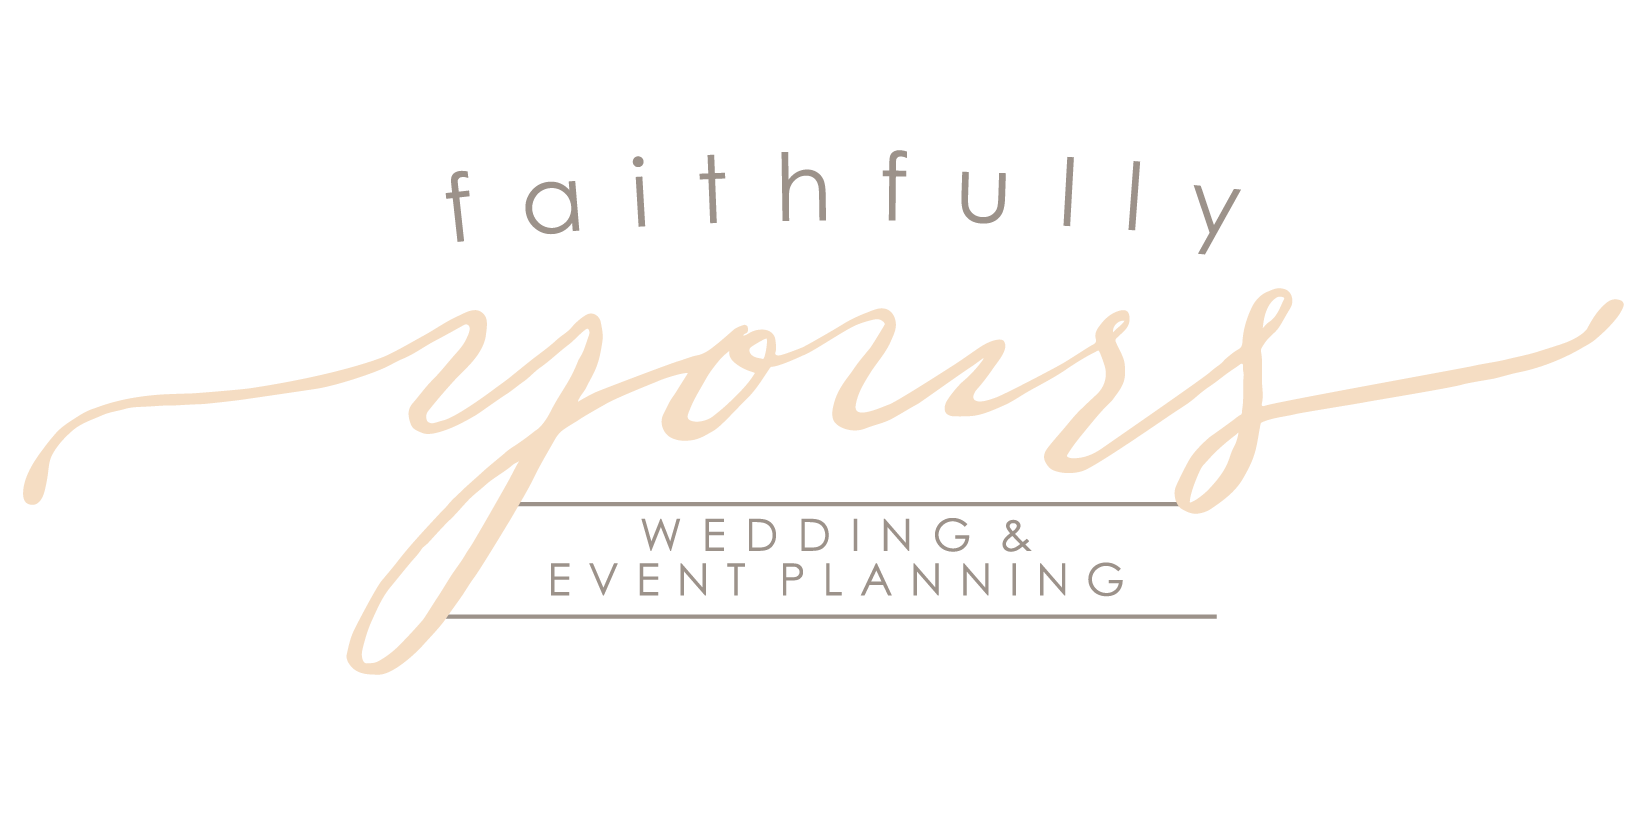 Faithfully Yours Weddings & Events